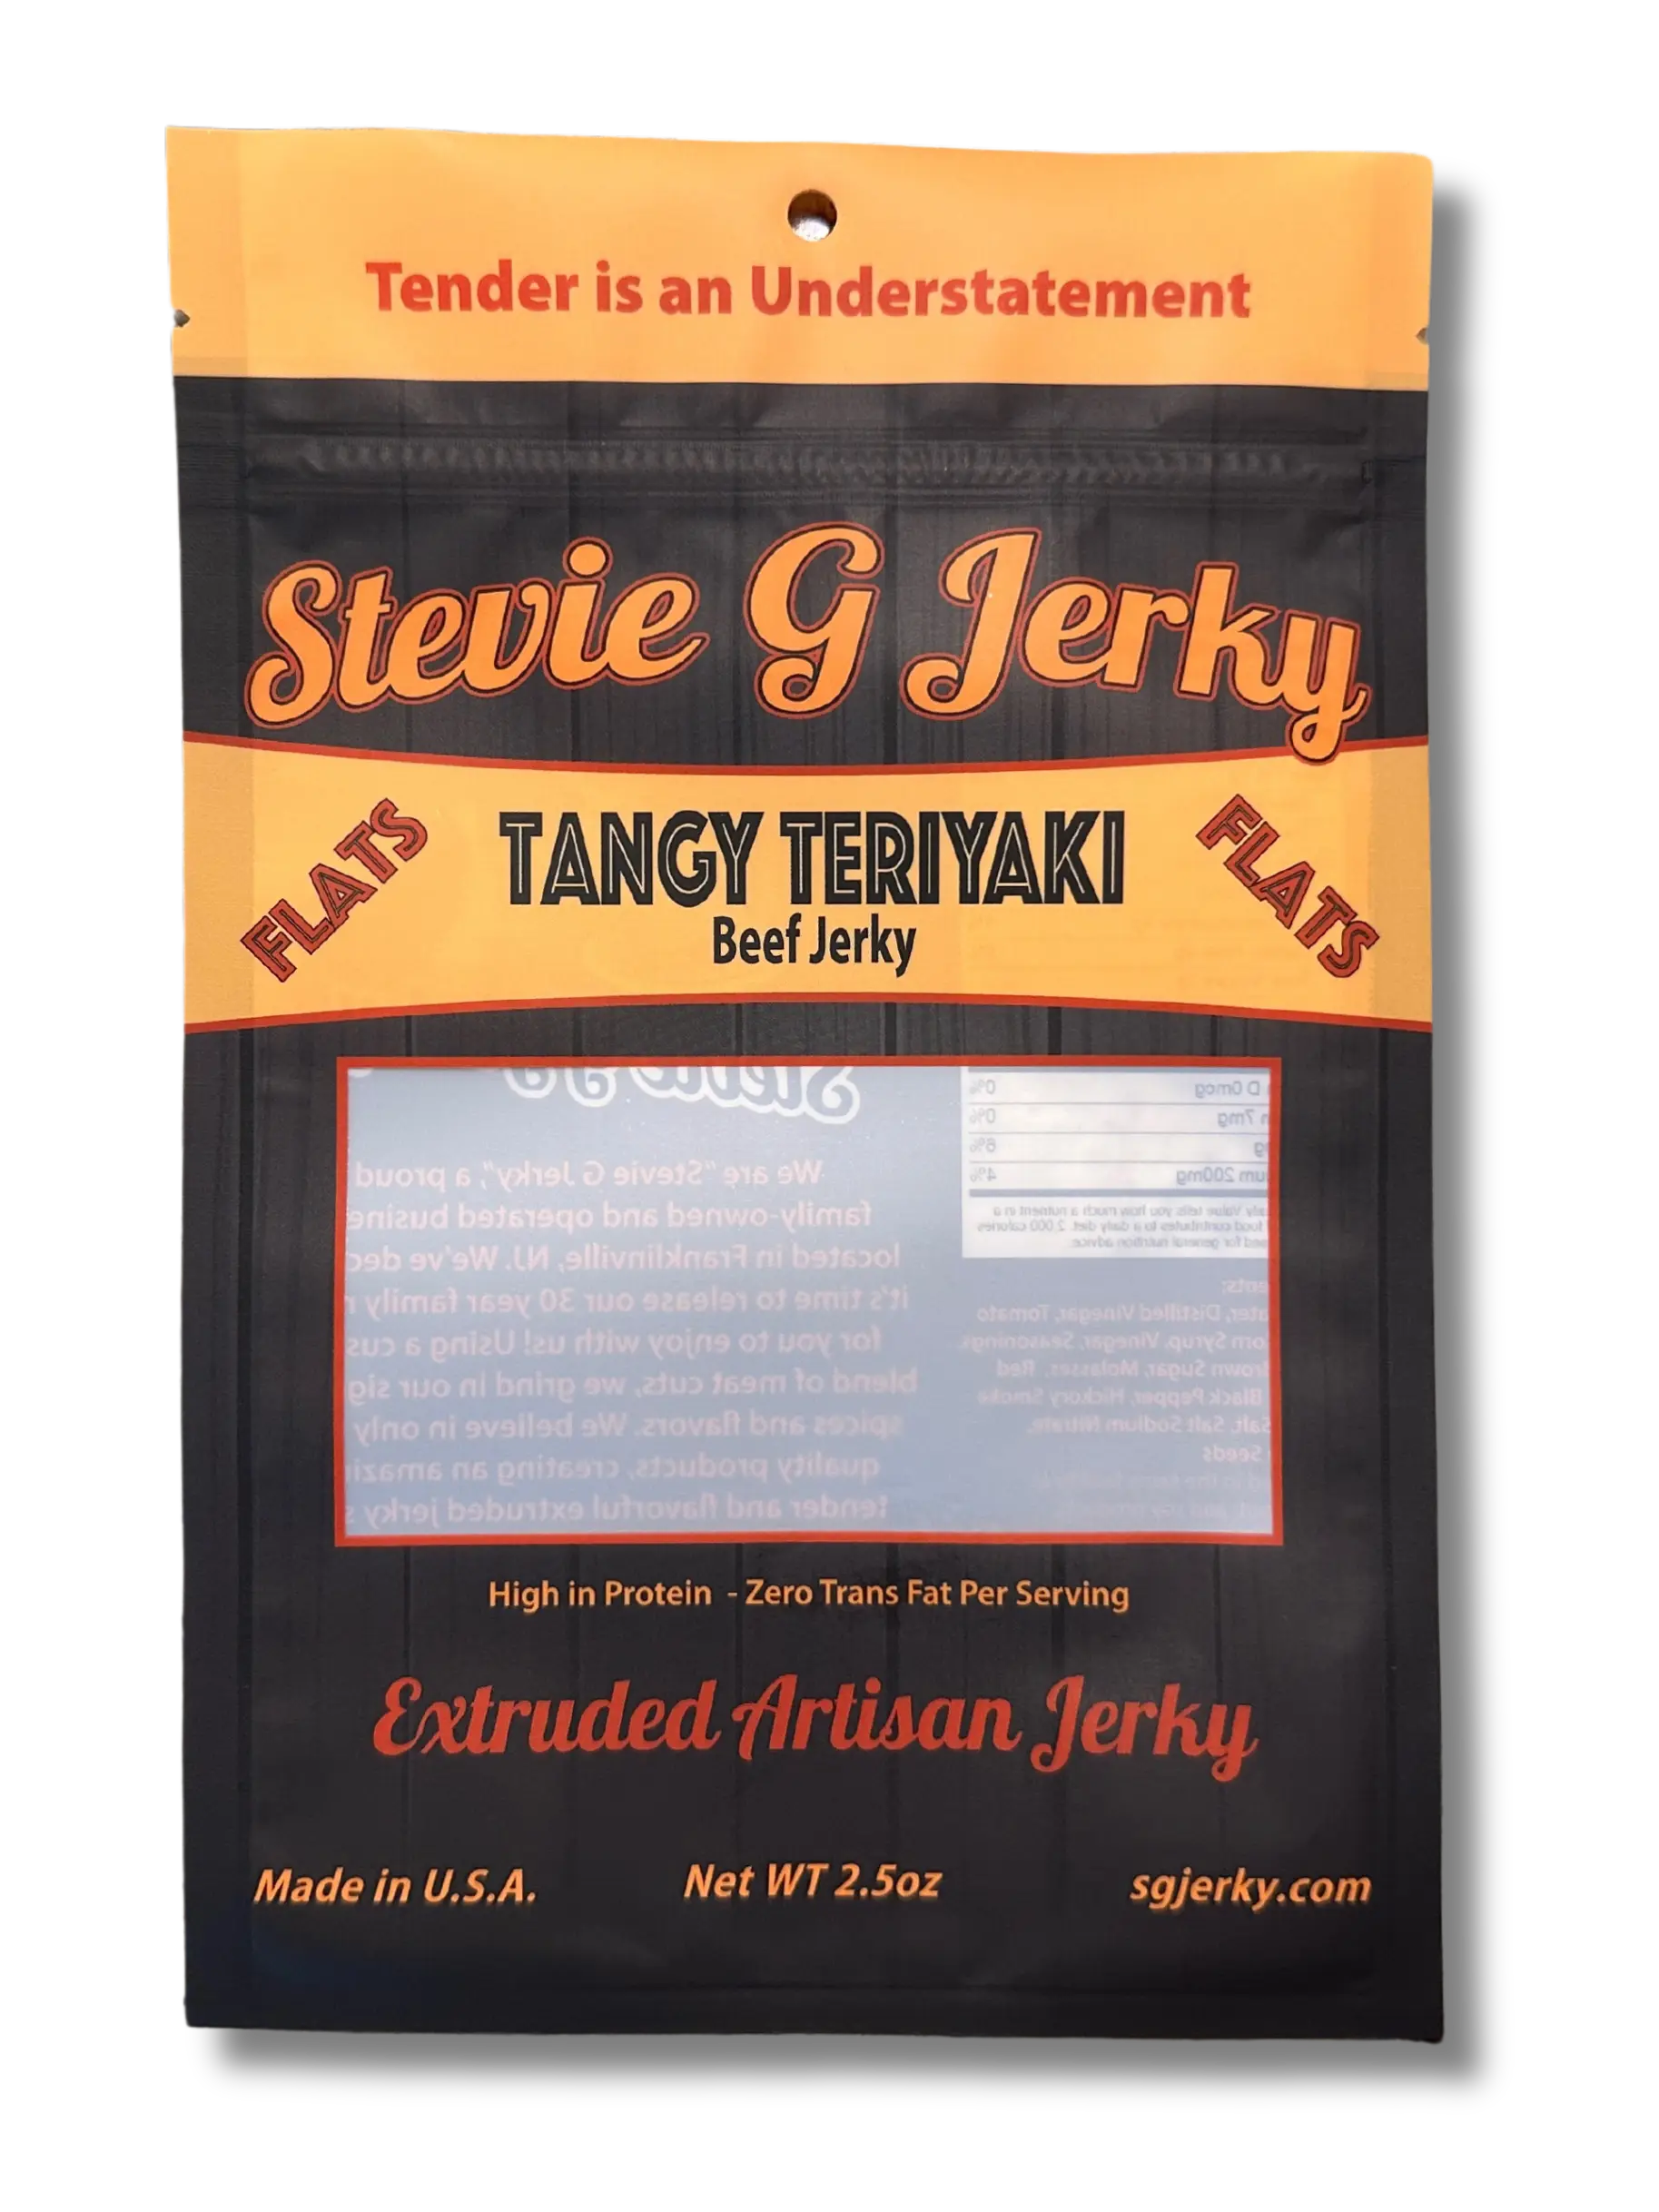 Tangy teriyaki flavor from Steve G's beef jerky